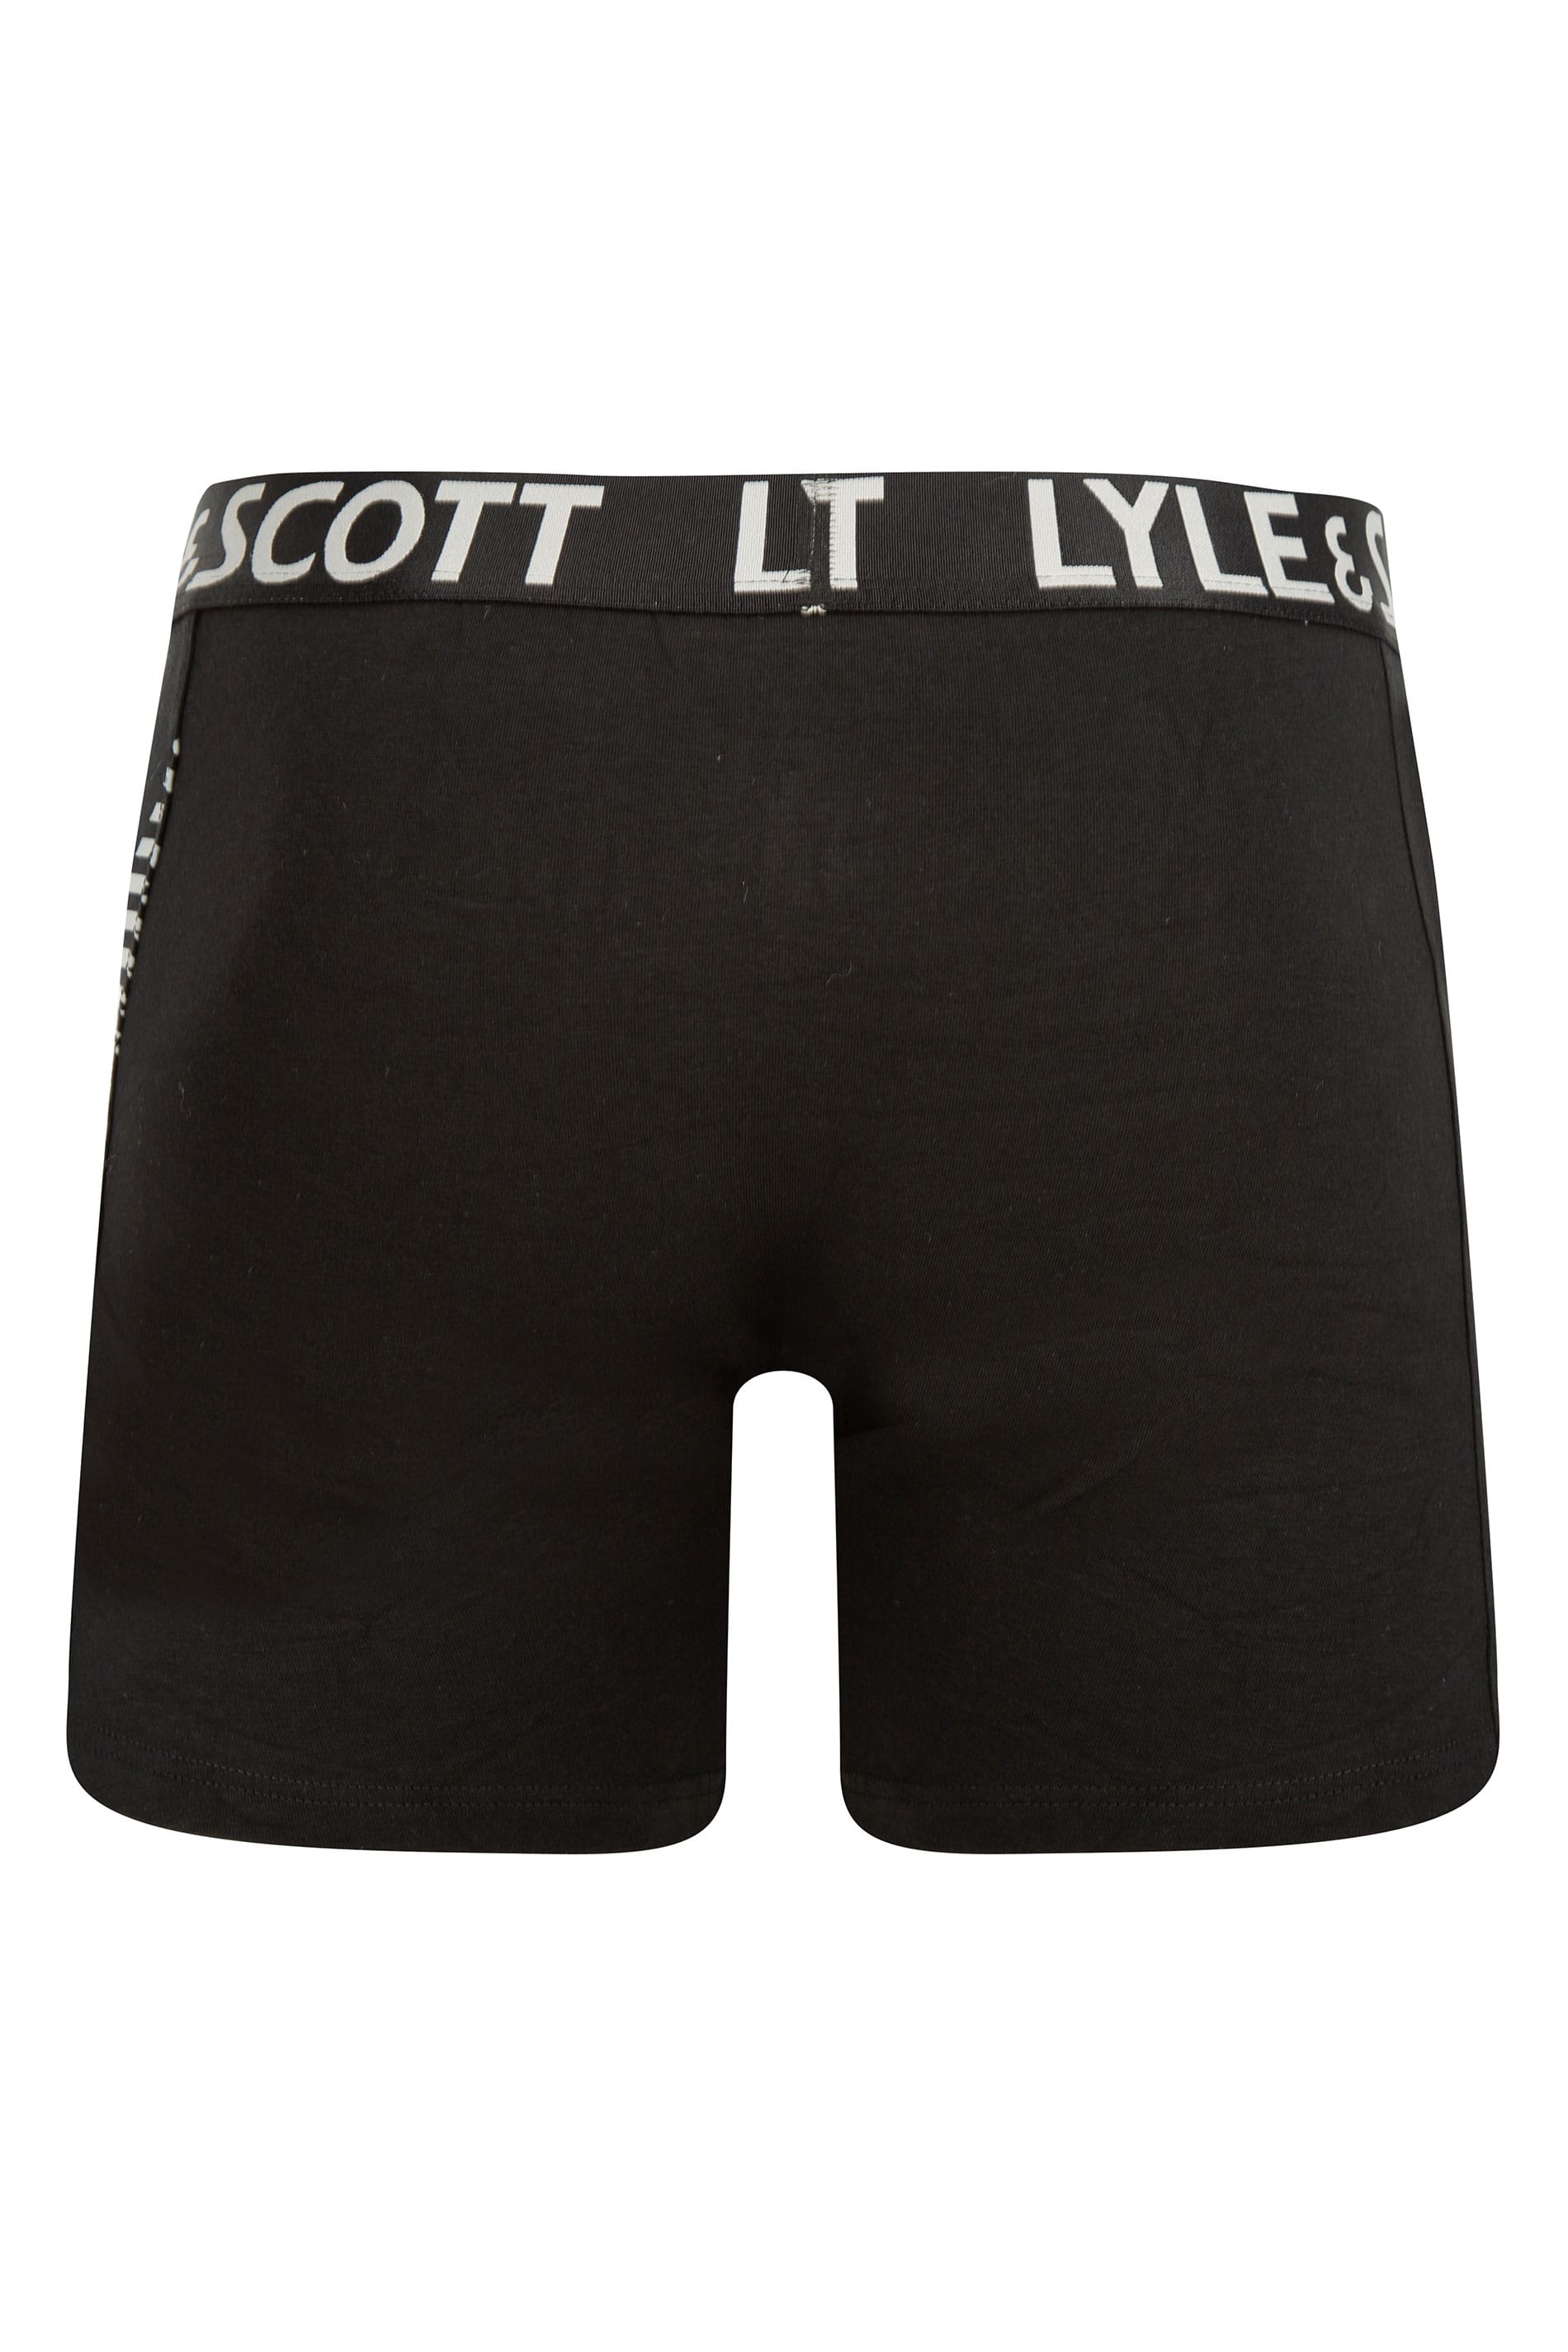 LYLE & SCOTT Black & Grey 3 PACK Oliver Boxers | BadRhino